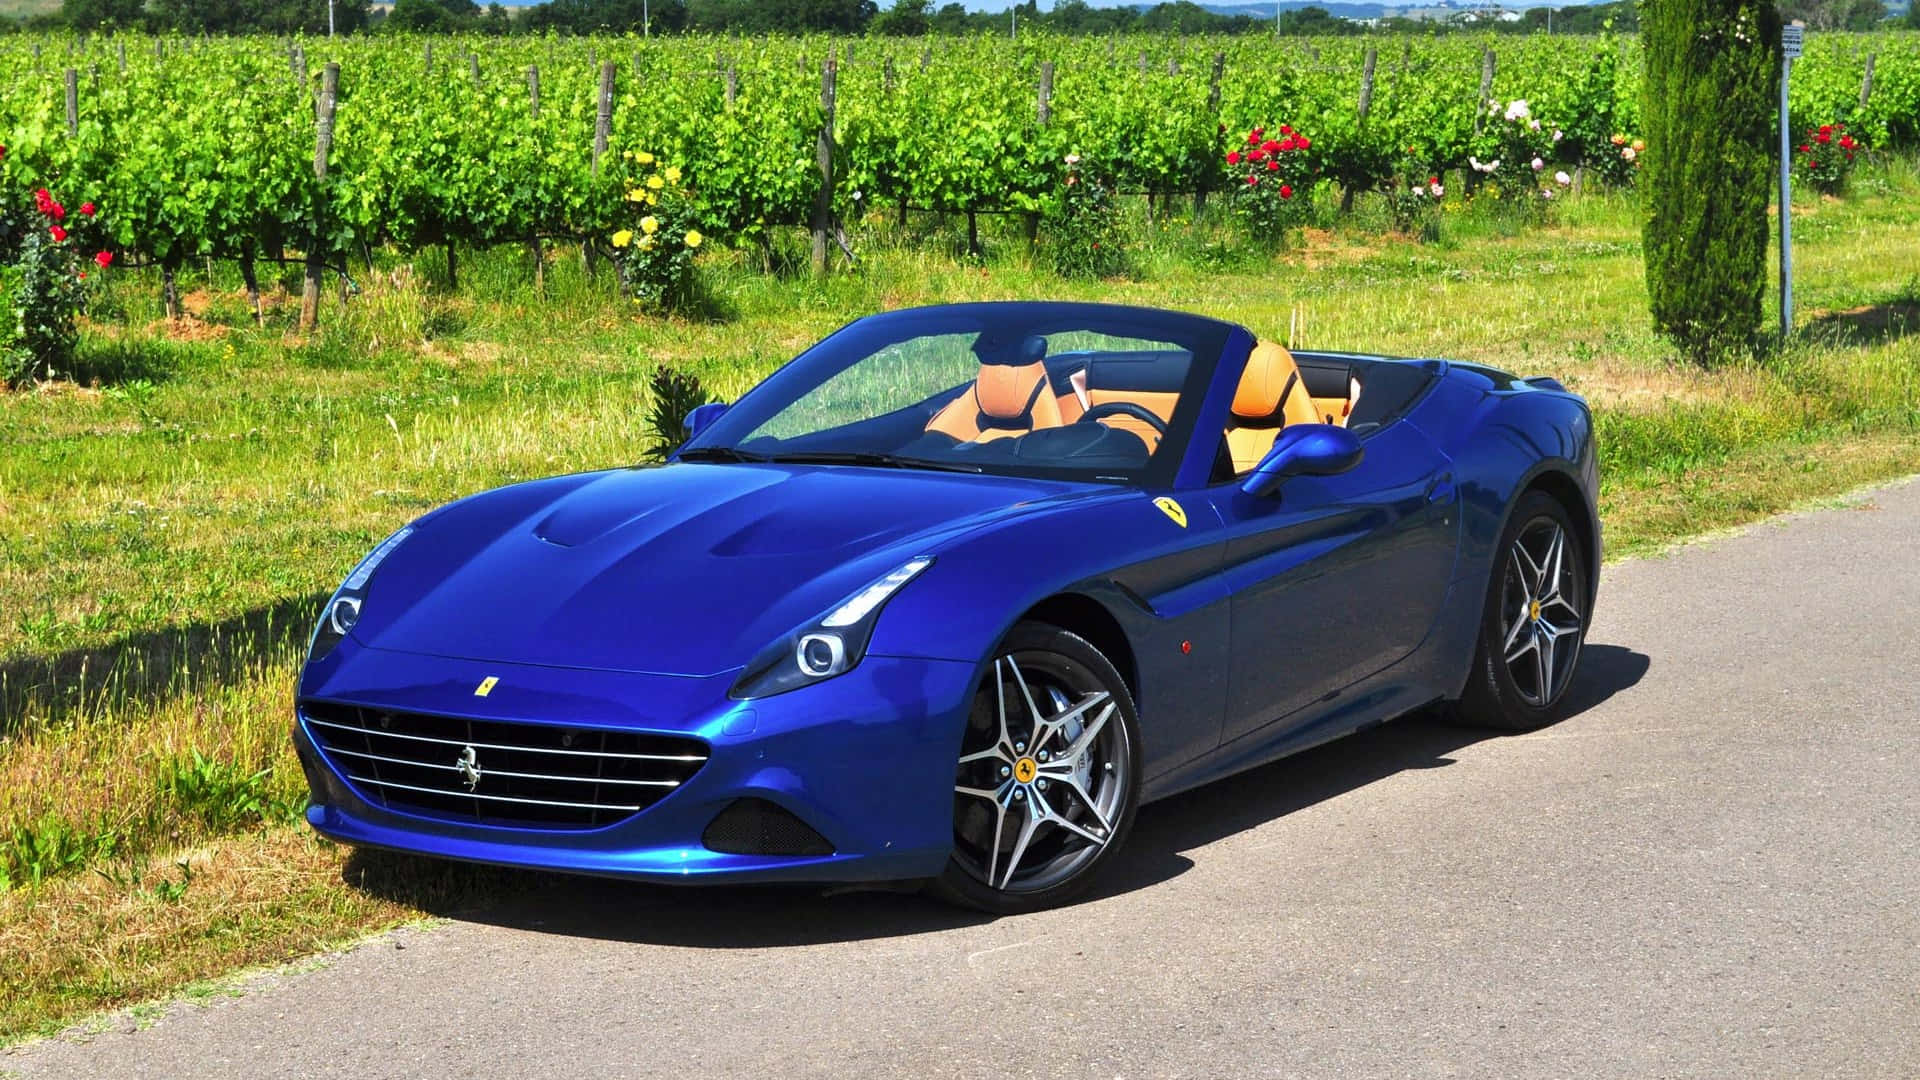 Stunning Ferrari California T Showcasing its Sophistication and Speed Wallpaper